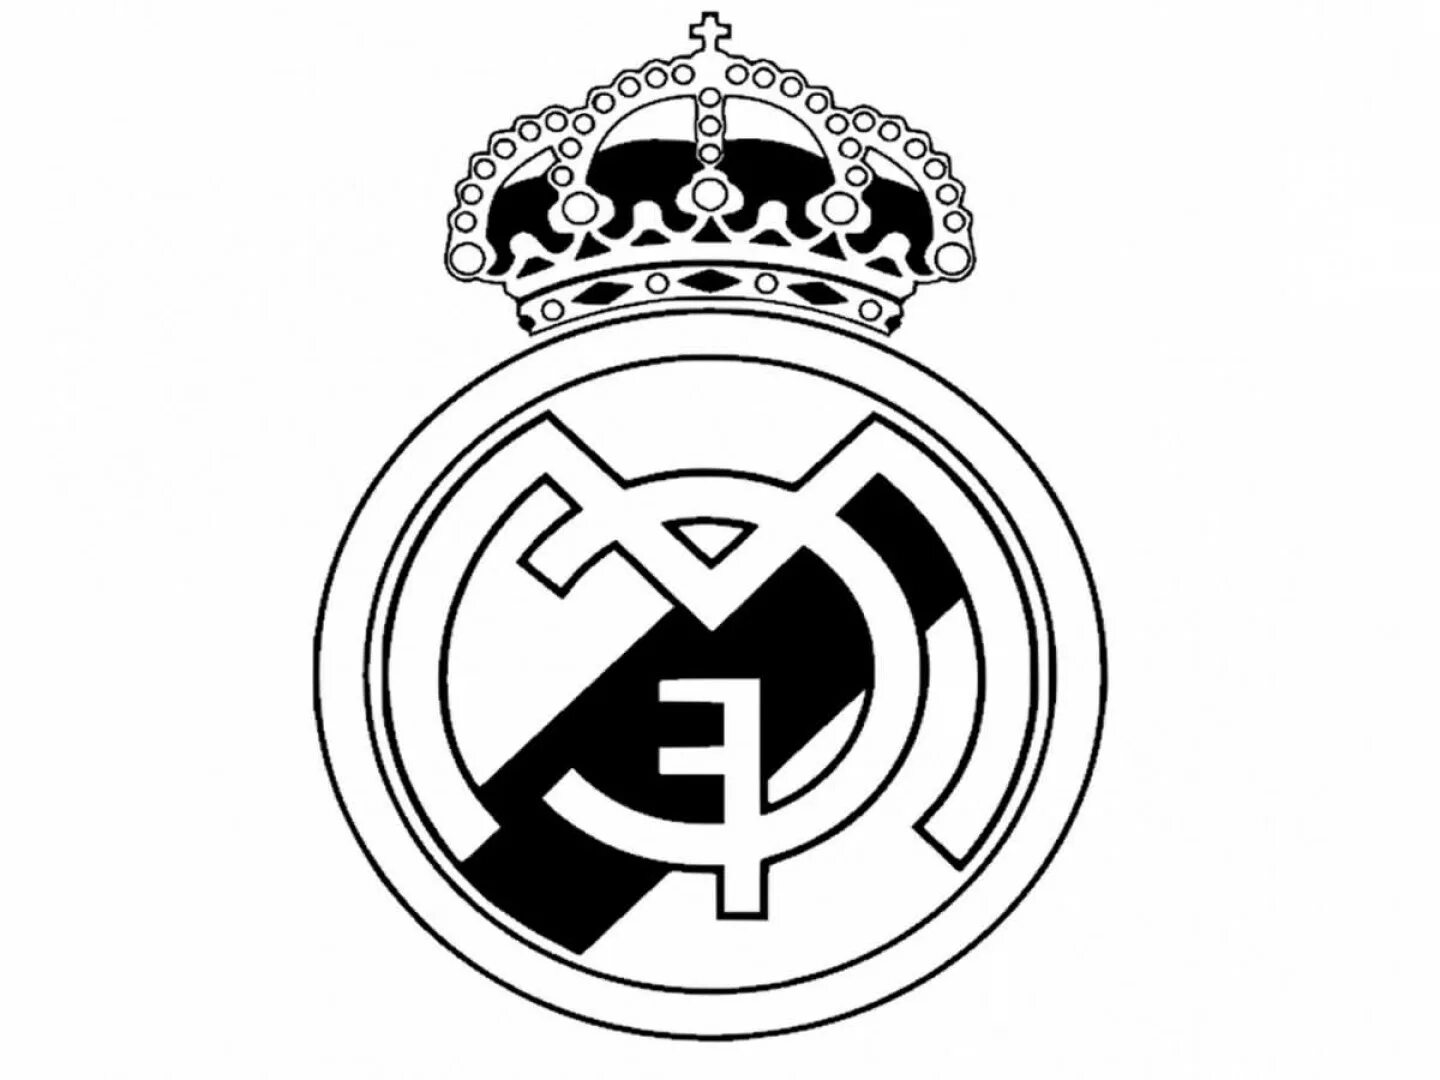 Реал Мадрид логотип. Знак ФК Реал Мадрид. Логотип футбольной команды Реал Мадрид. Эмблема Реал Мадрид футбольный клуб вектор.